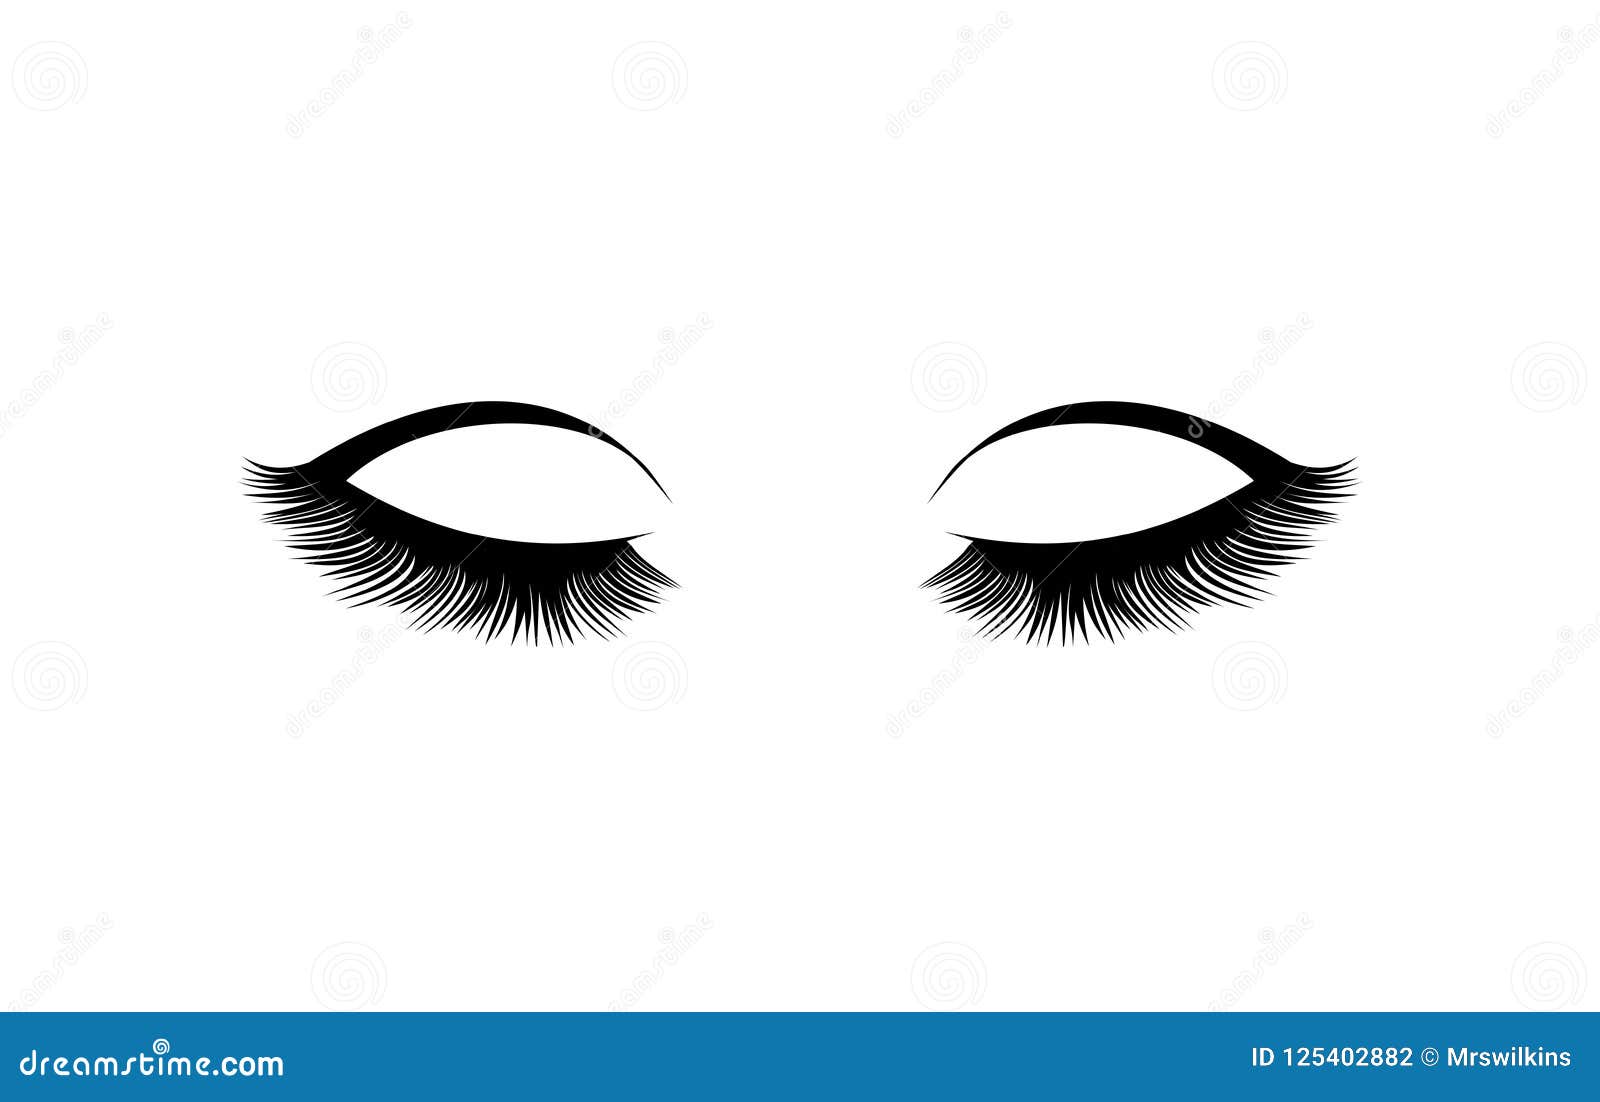 Eyelashes Vector Illustration, Beauty Stock Illustration